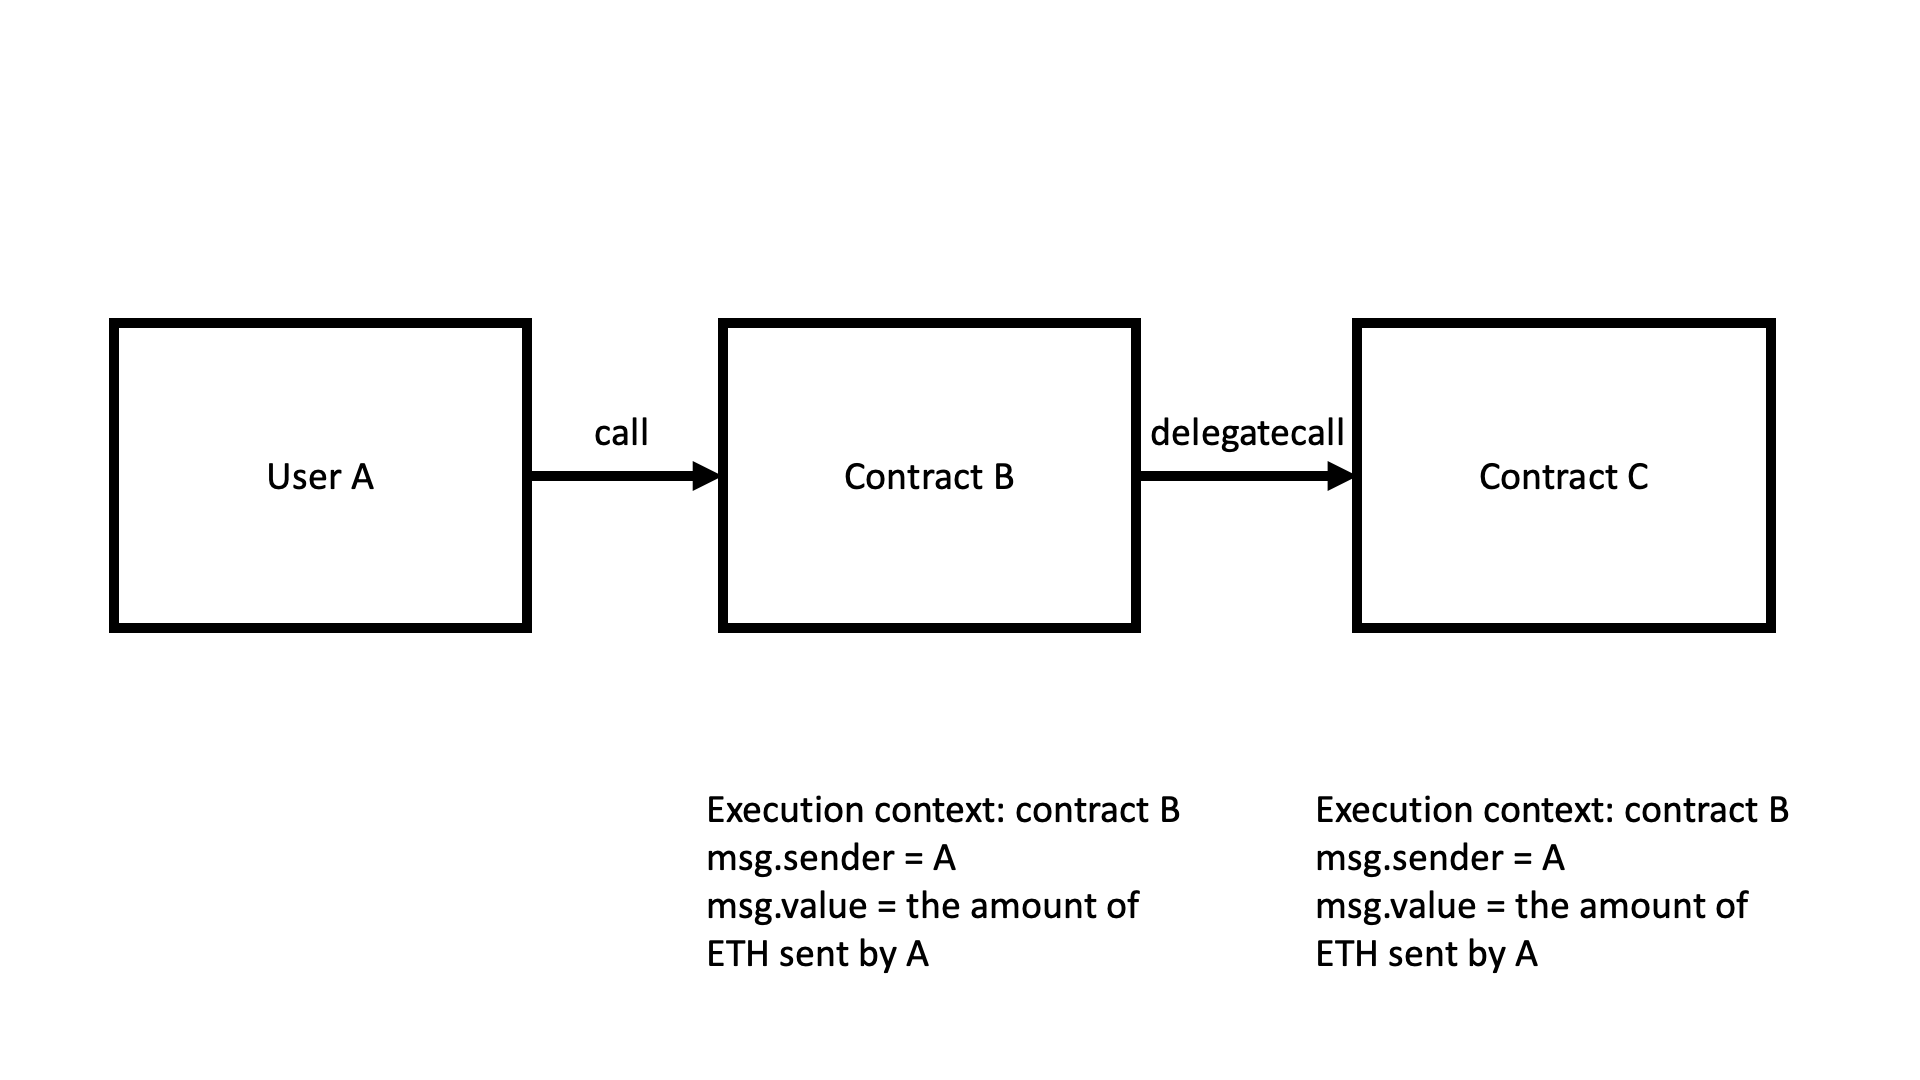 execution context of delegatecall